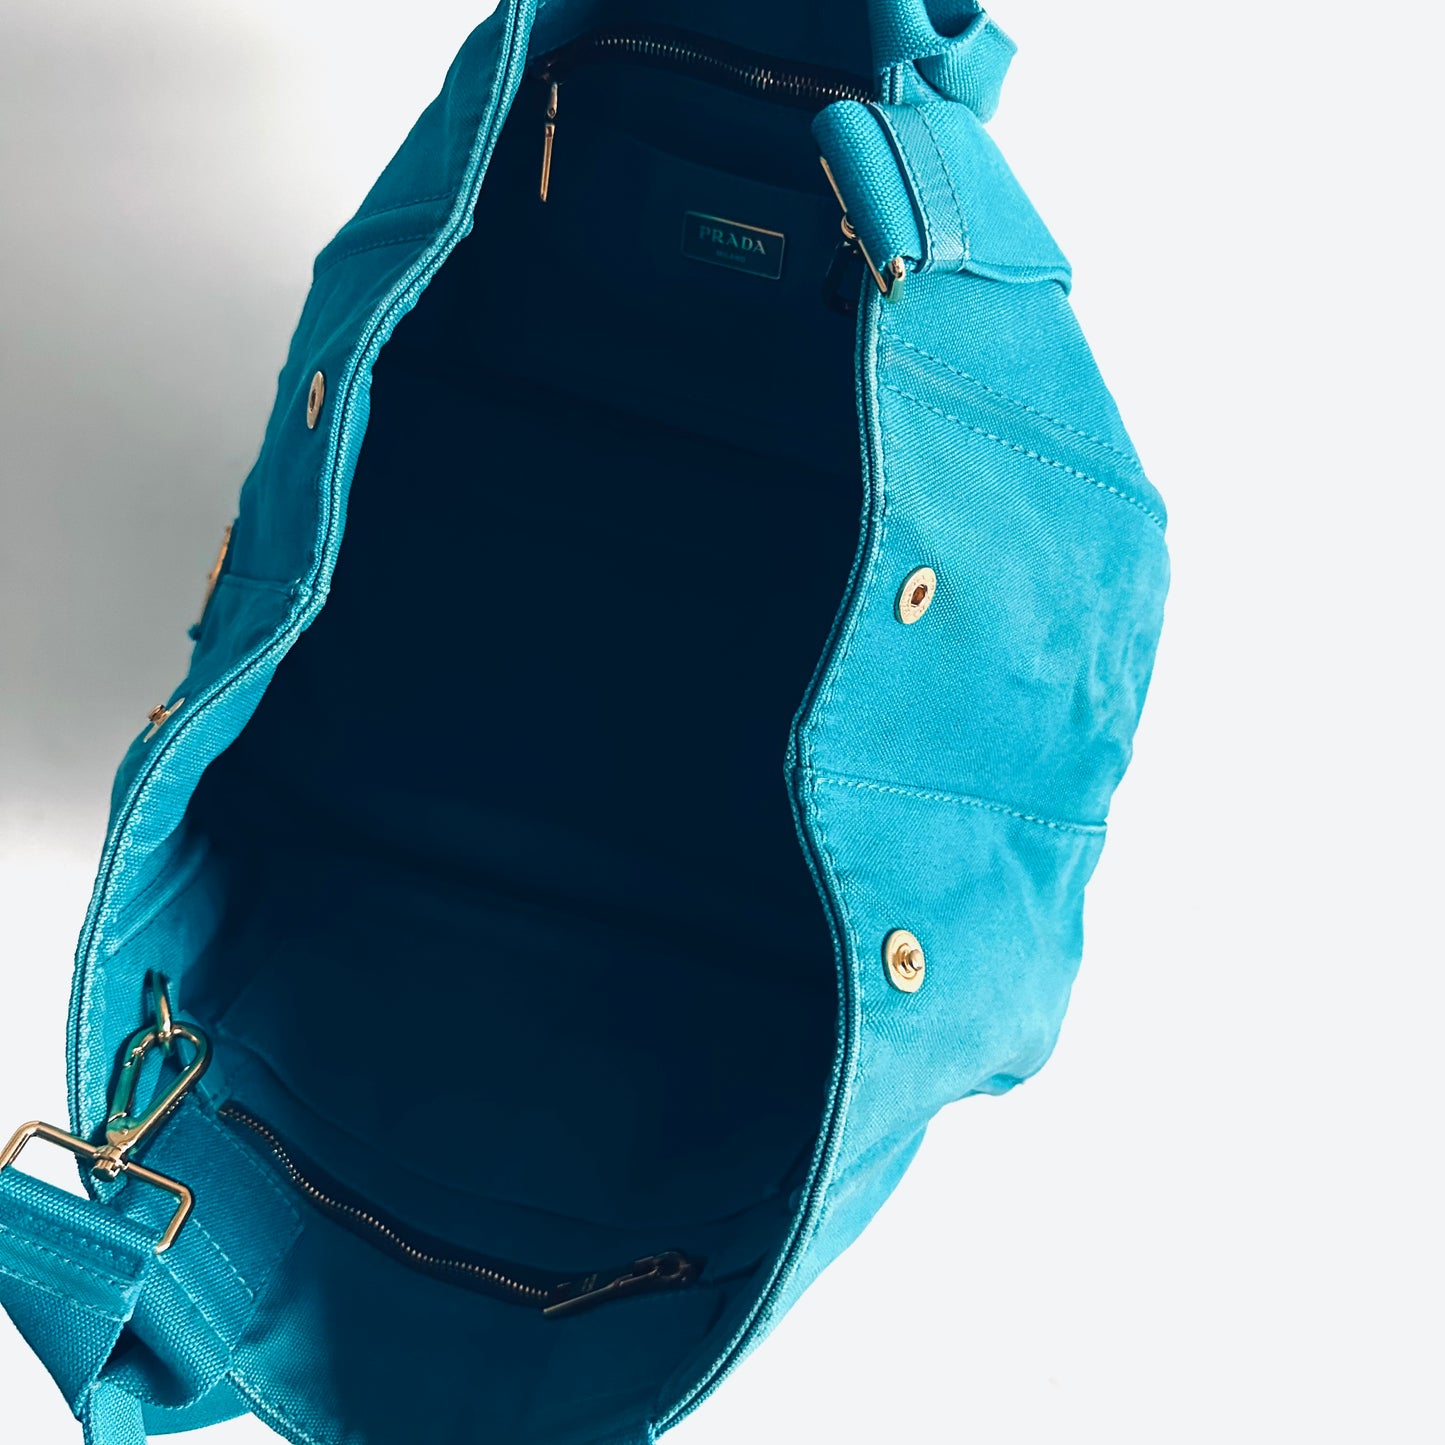 Prada Canapa Teal Blue GHW Classic Logo 2-Way Structured Shopper Shoulder Sling Tote Bag